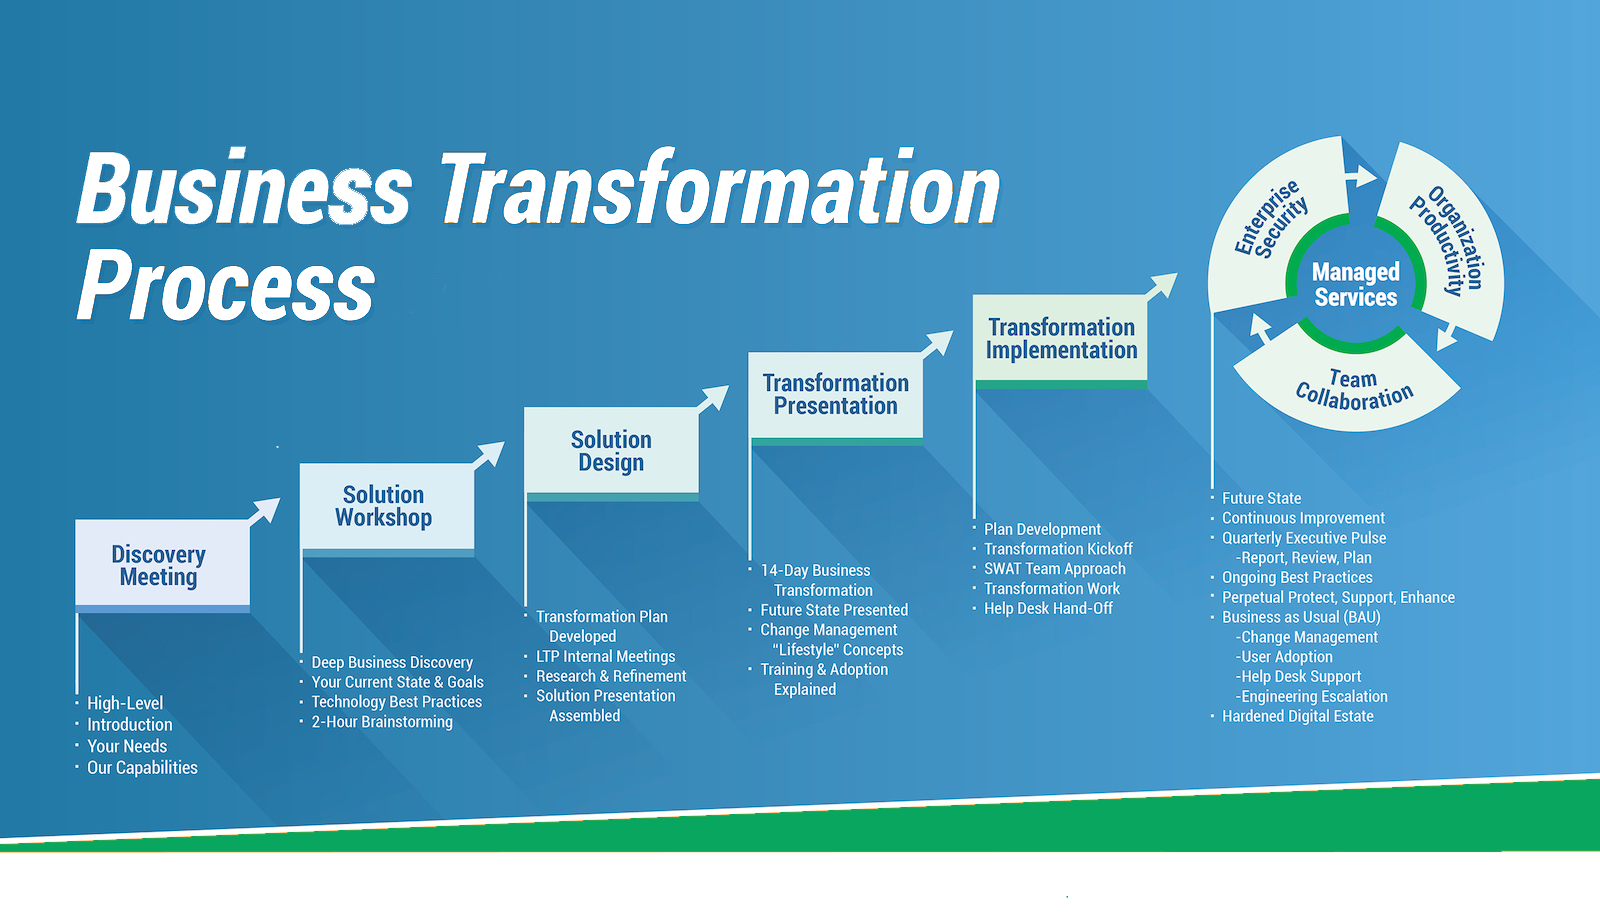 Business Transformation Process chart